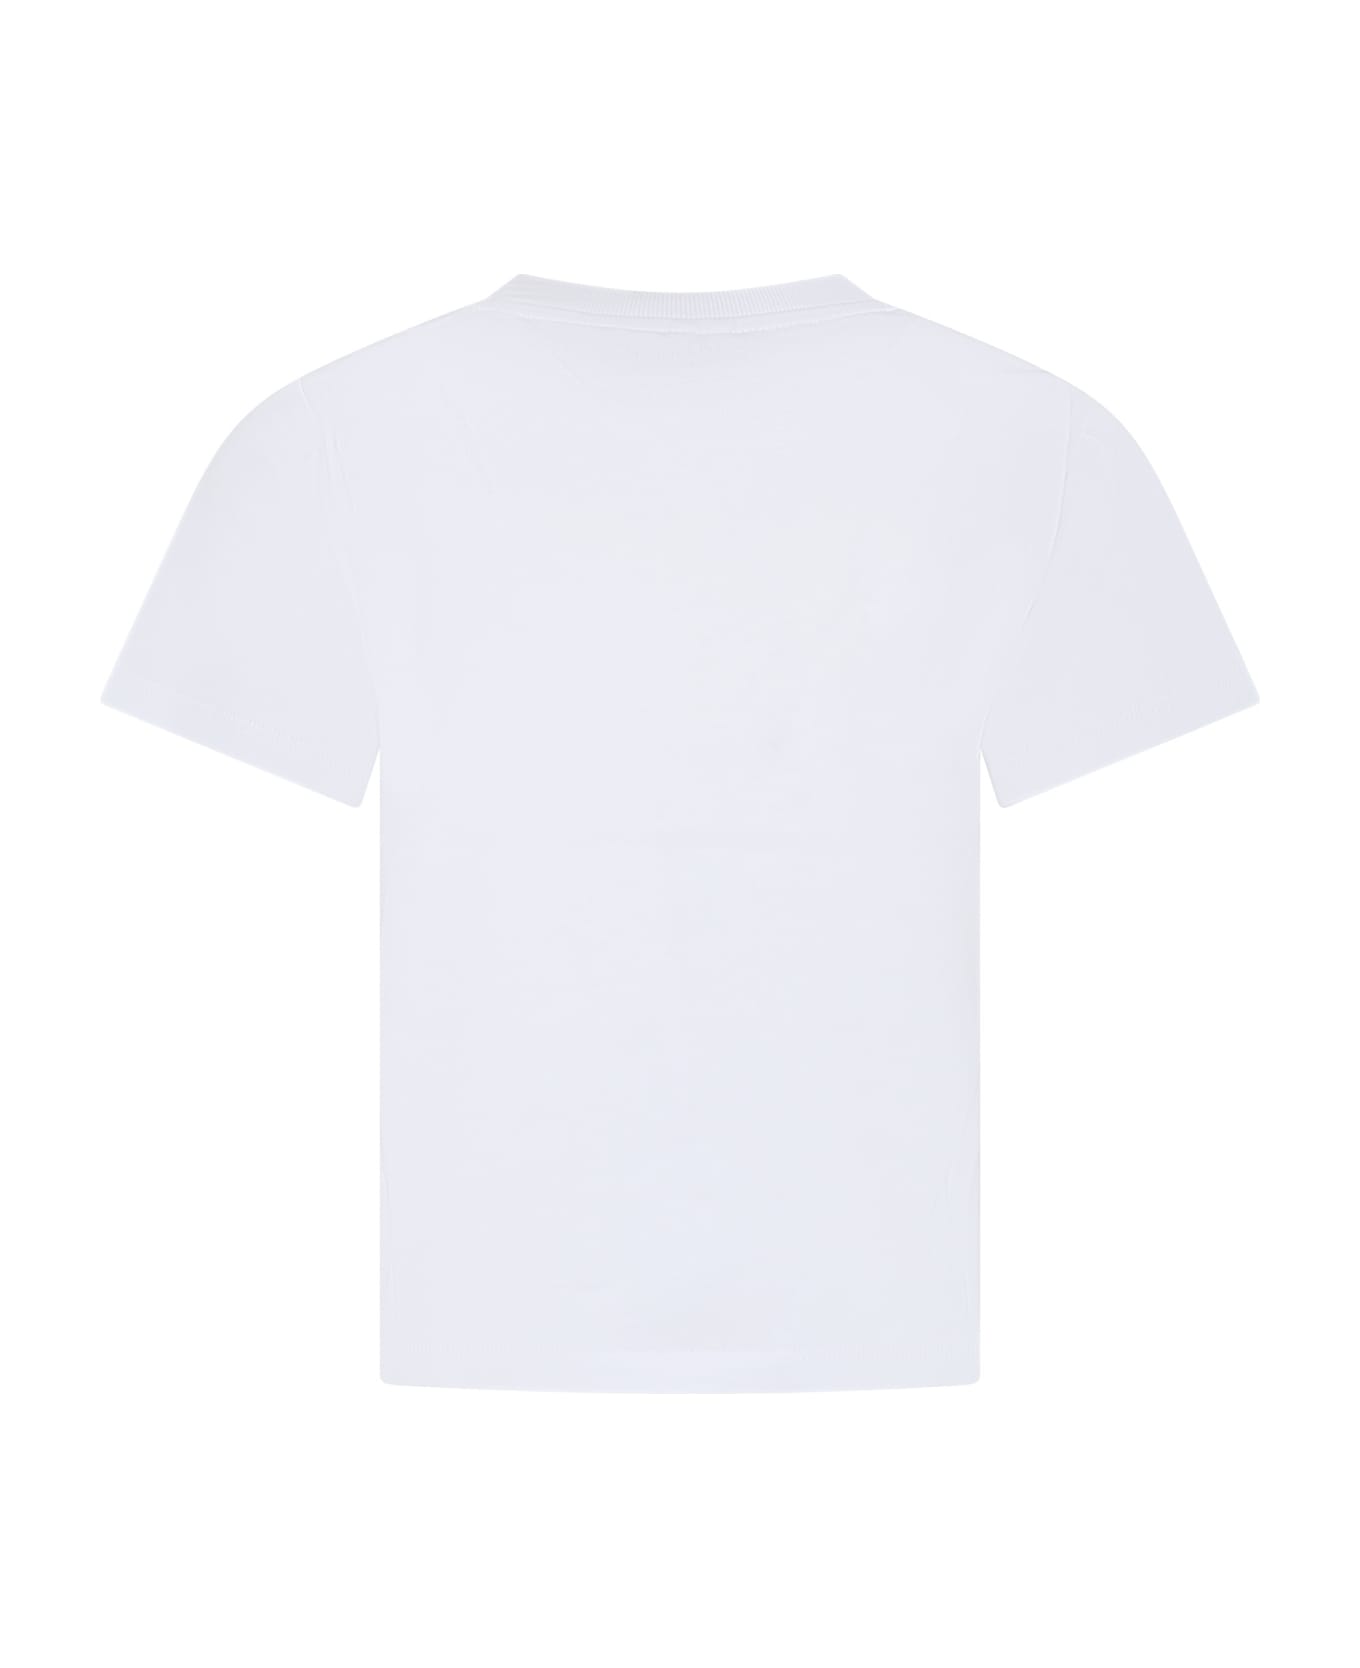 Stella McCartney White T-shirt For Boy With Print - Avorio